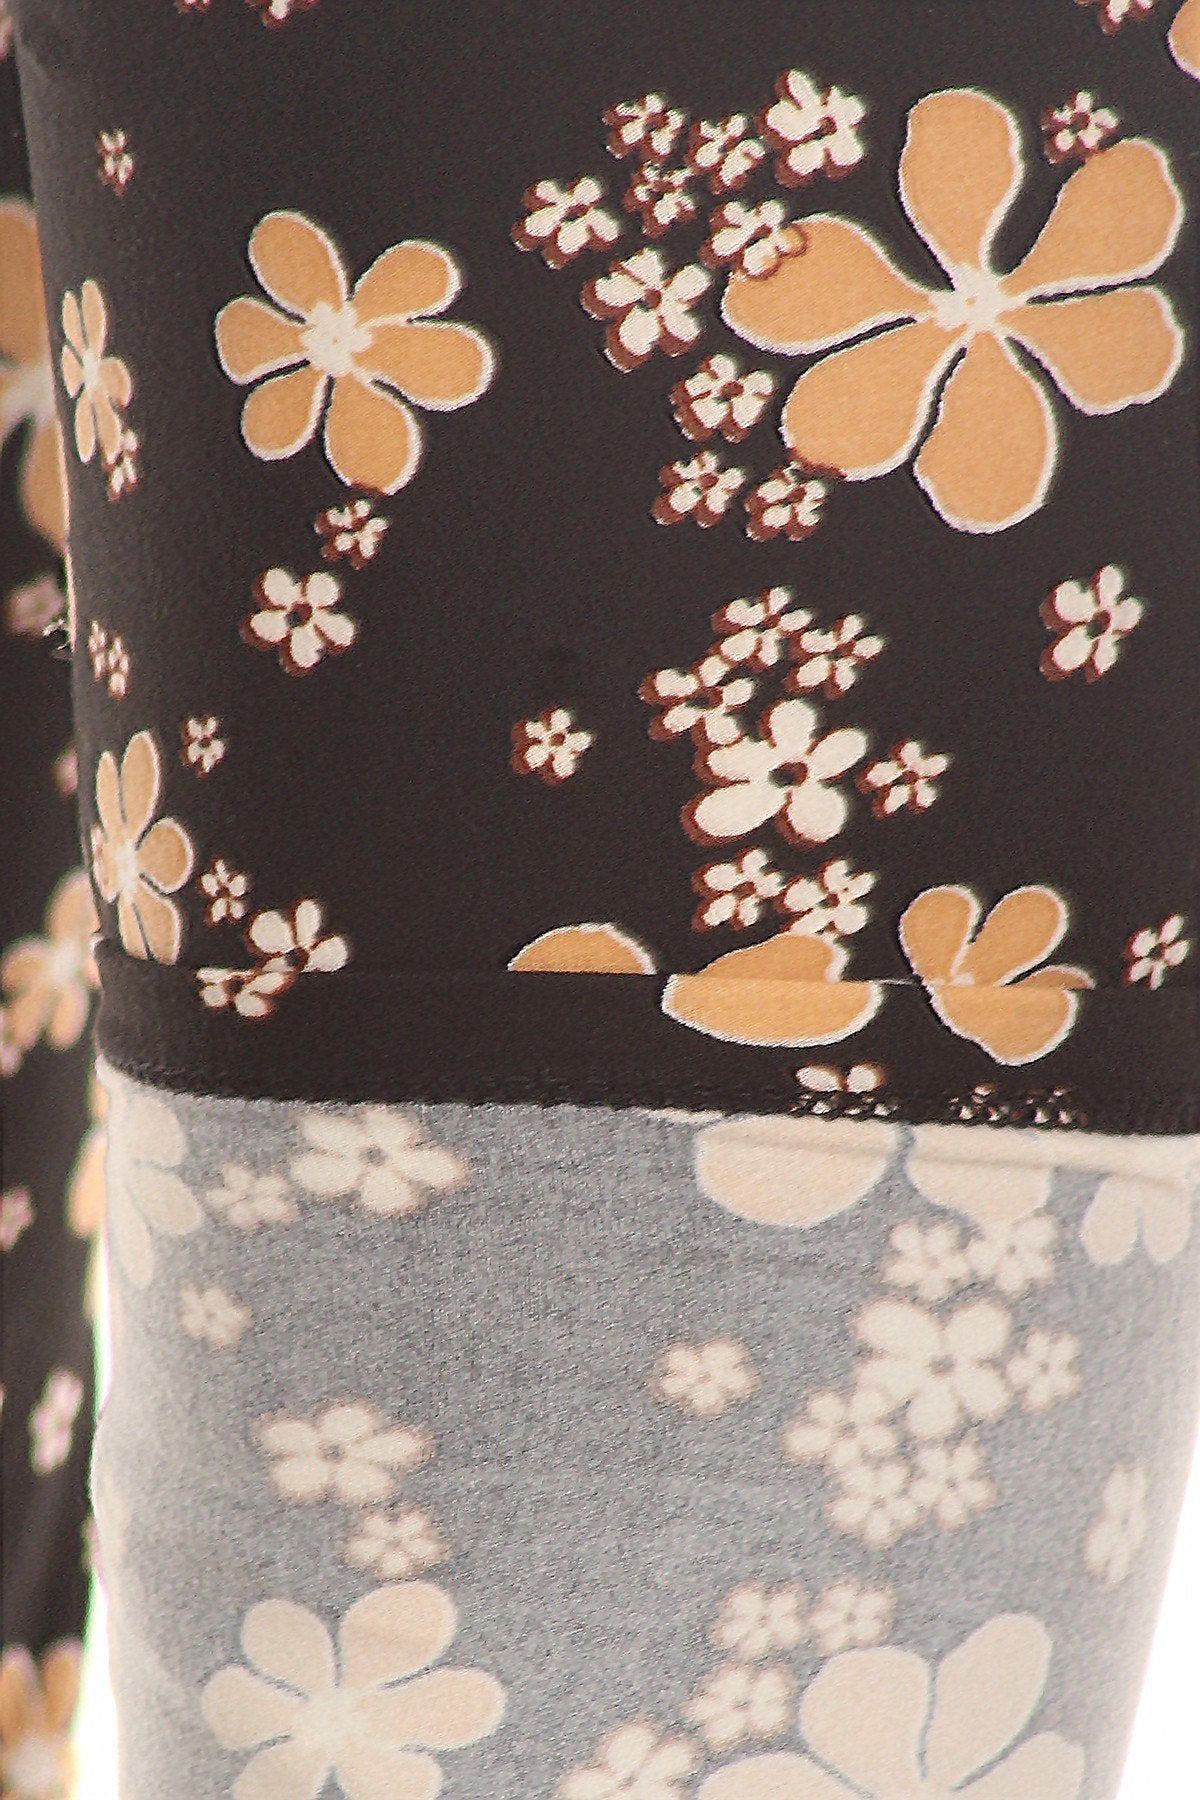 Super Soft Peach Skin Fabric, Floral Graphic Printed Knit Legging With Elastic Waist Detail. High Waist Fit